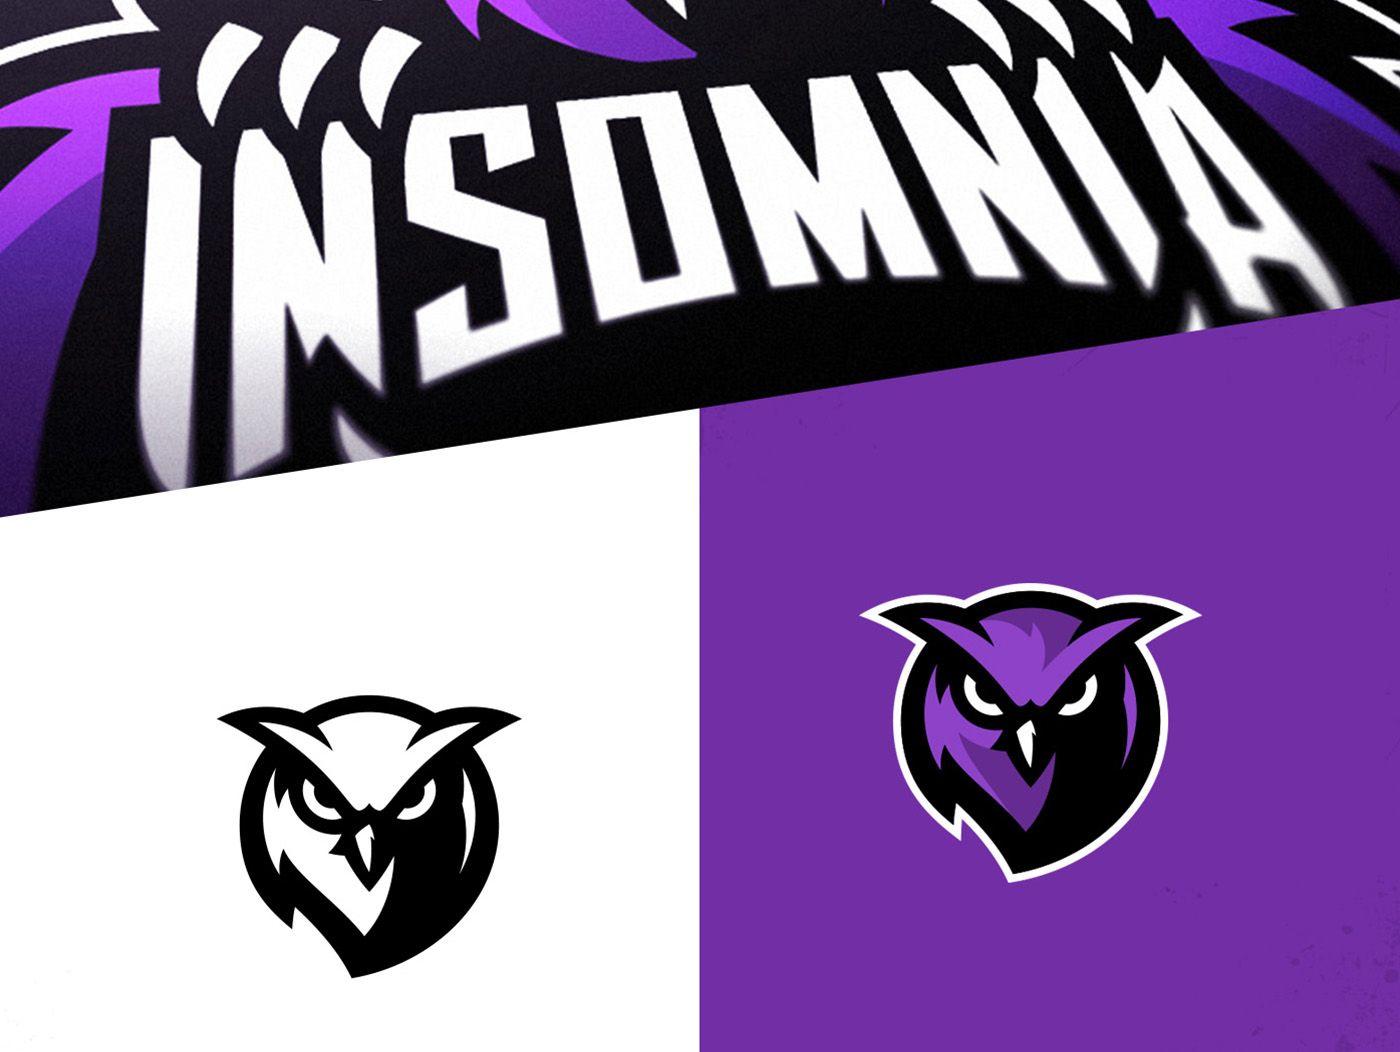 Insomnia Logo - Owl Sports Logo Design - Concepts - Chris Creamer's Sports Logos ...